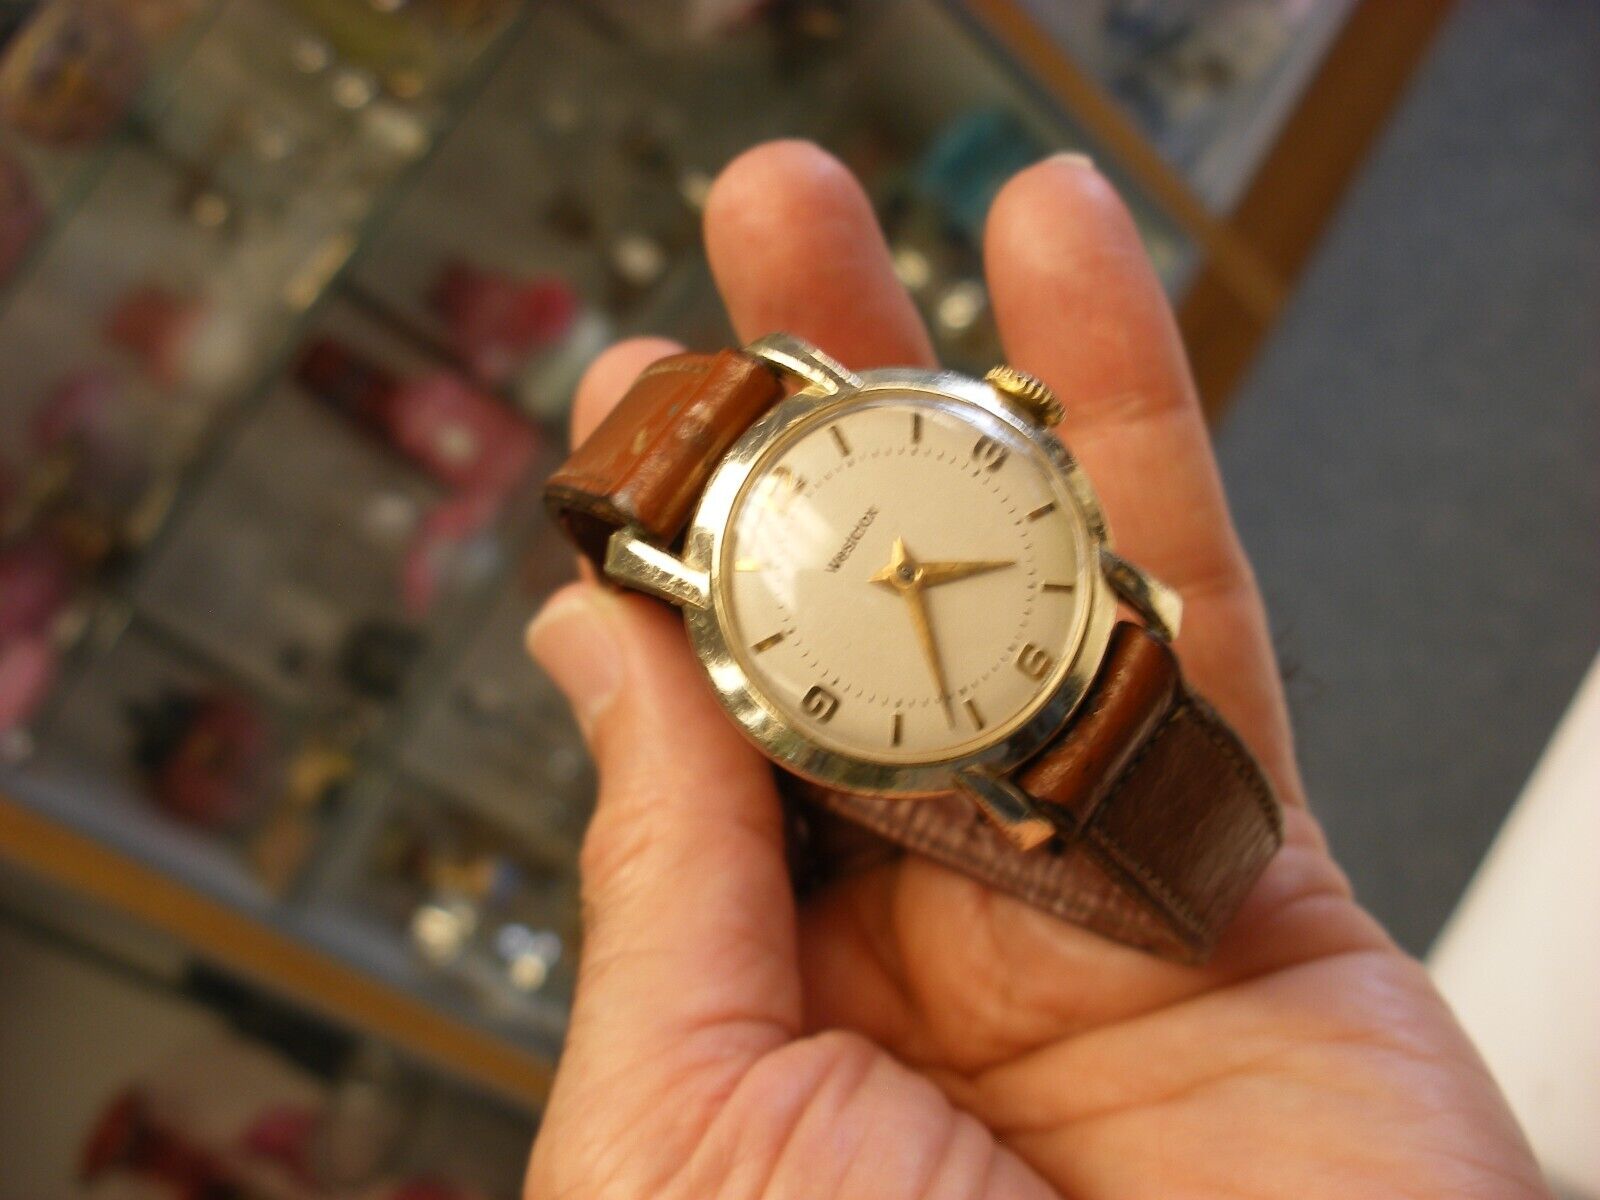 Vintage Westclox Watch - Not running - As found